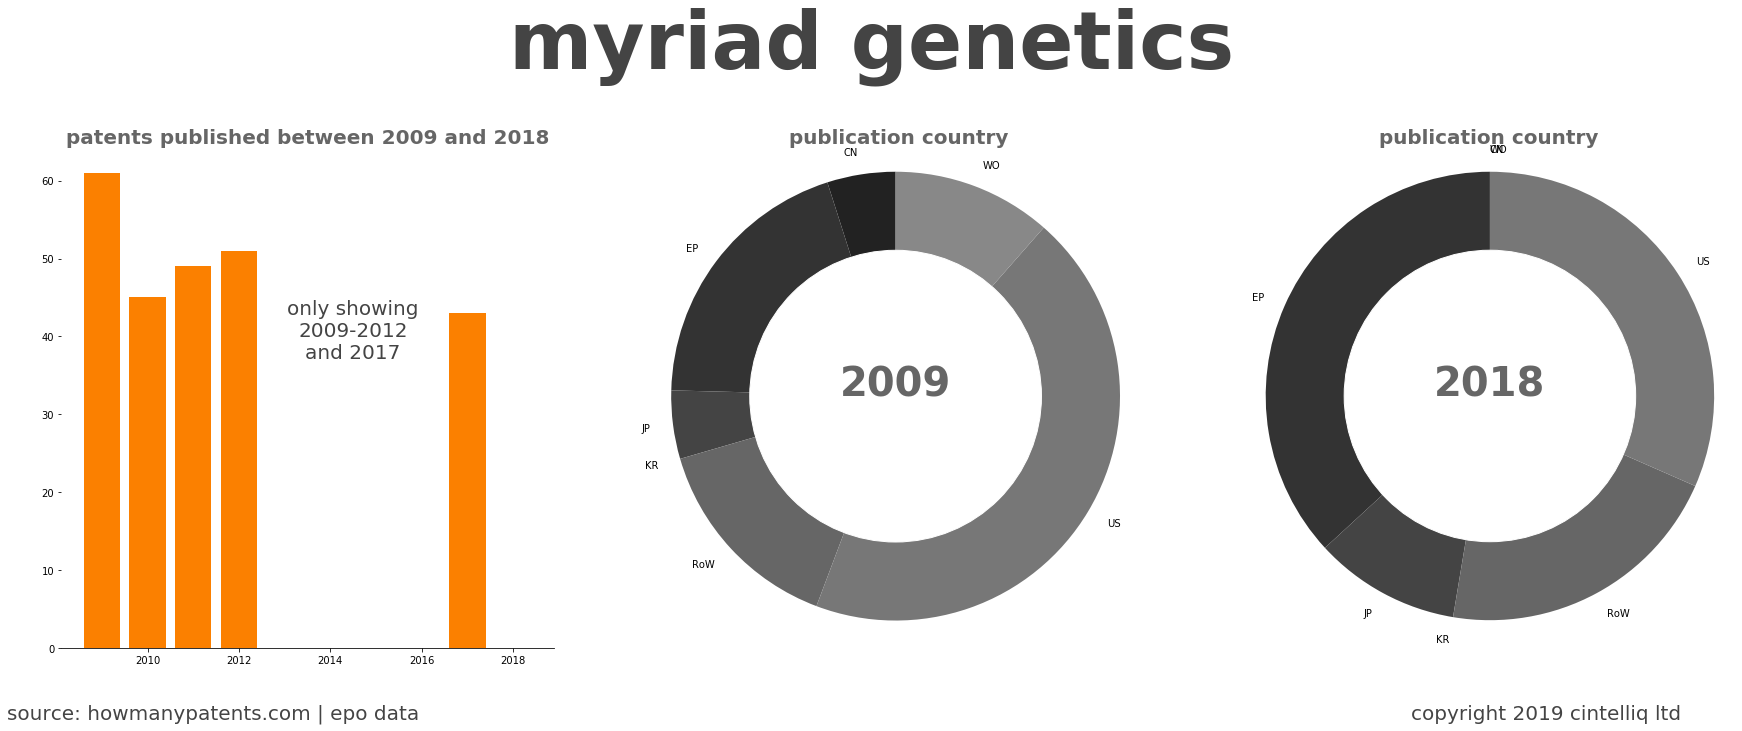 summary of patents for Myriad Genetics